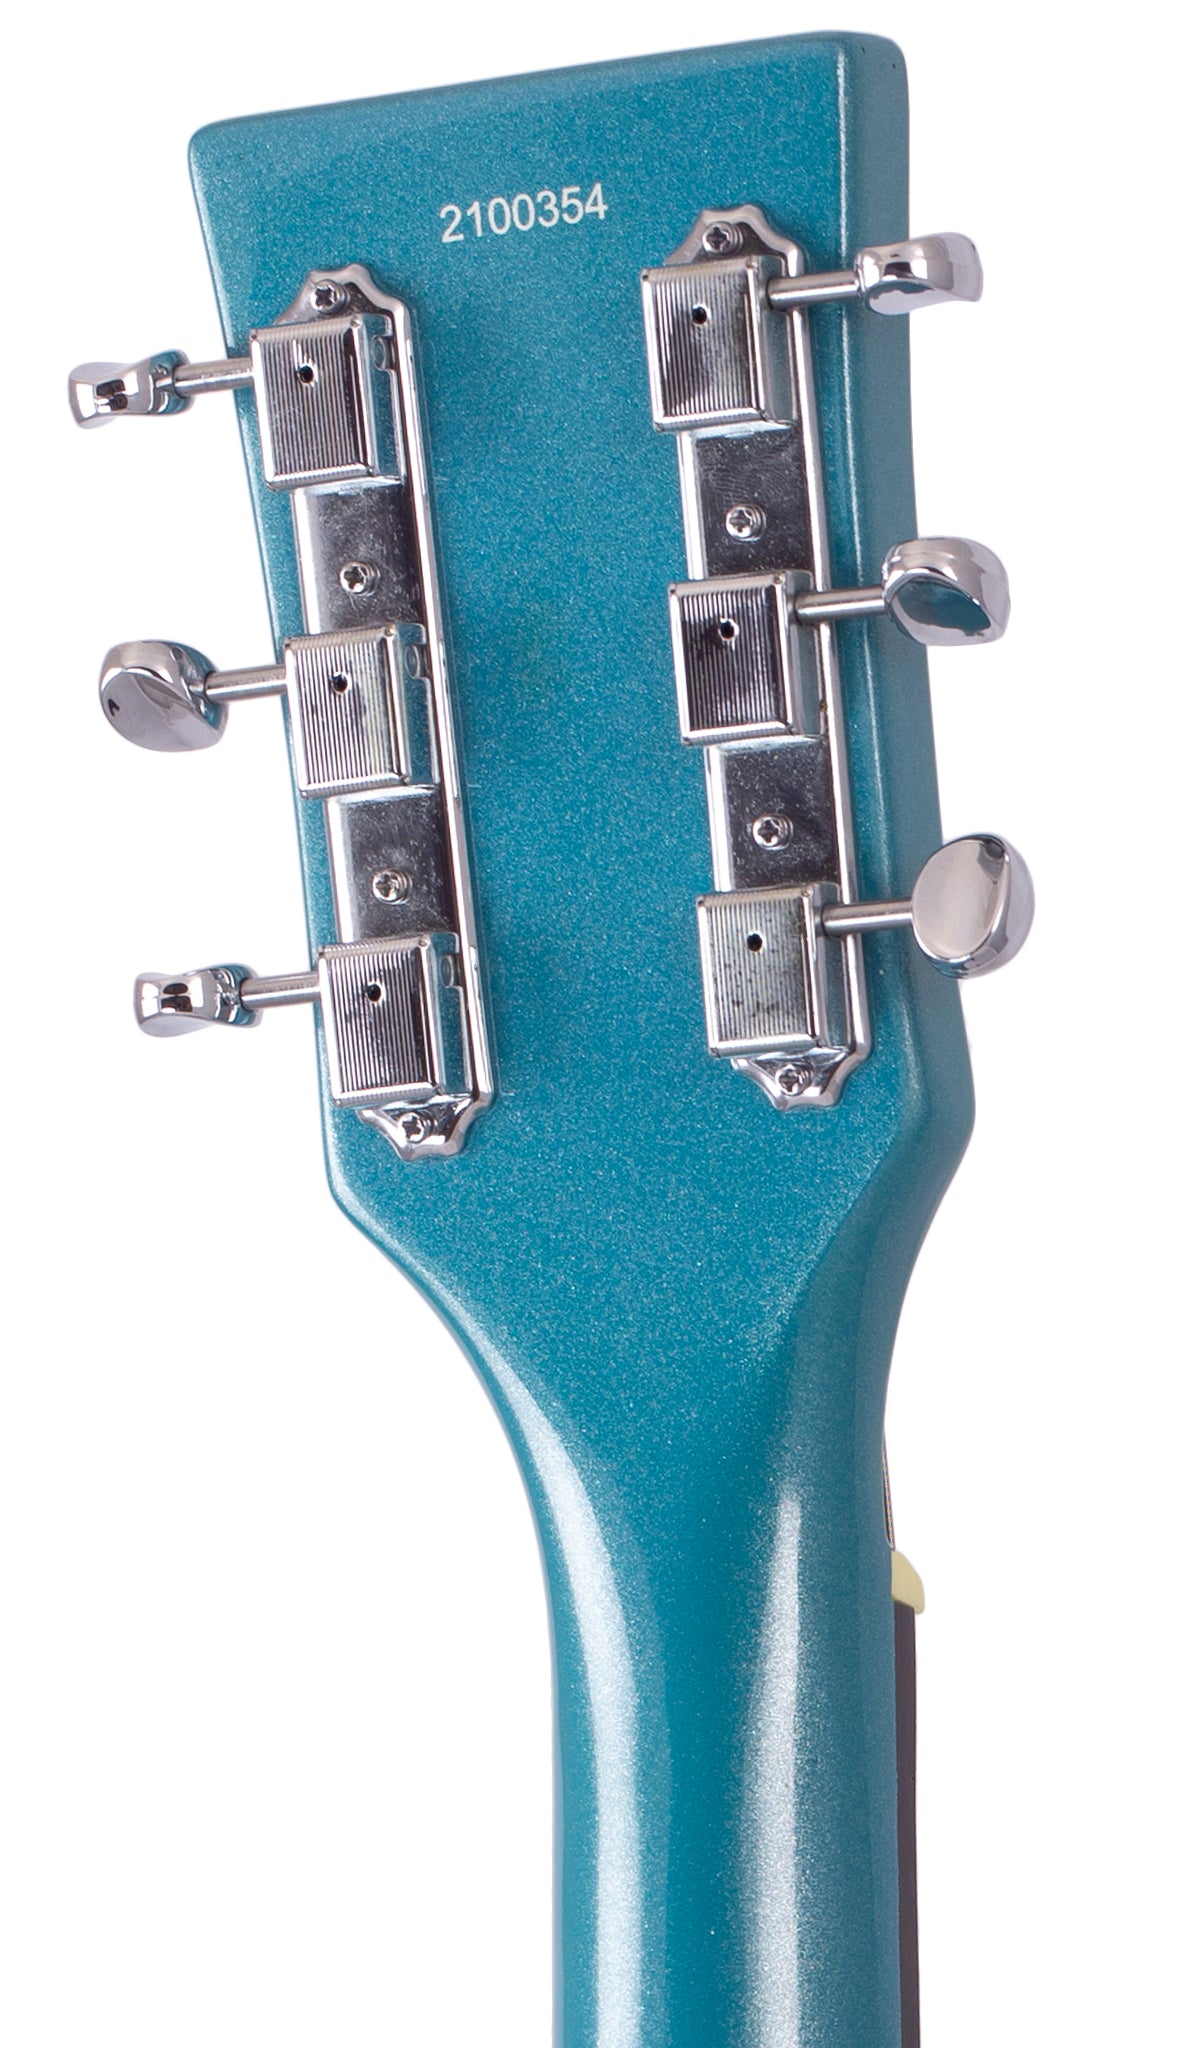 Eastwood Guitars Airline Bighorn Metallic Blue #color_metallic-blue